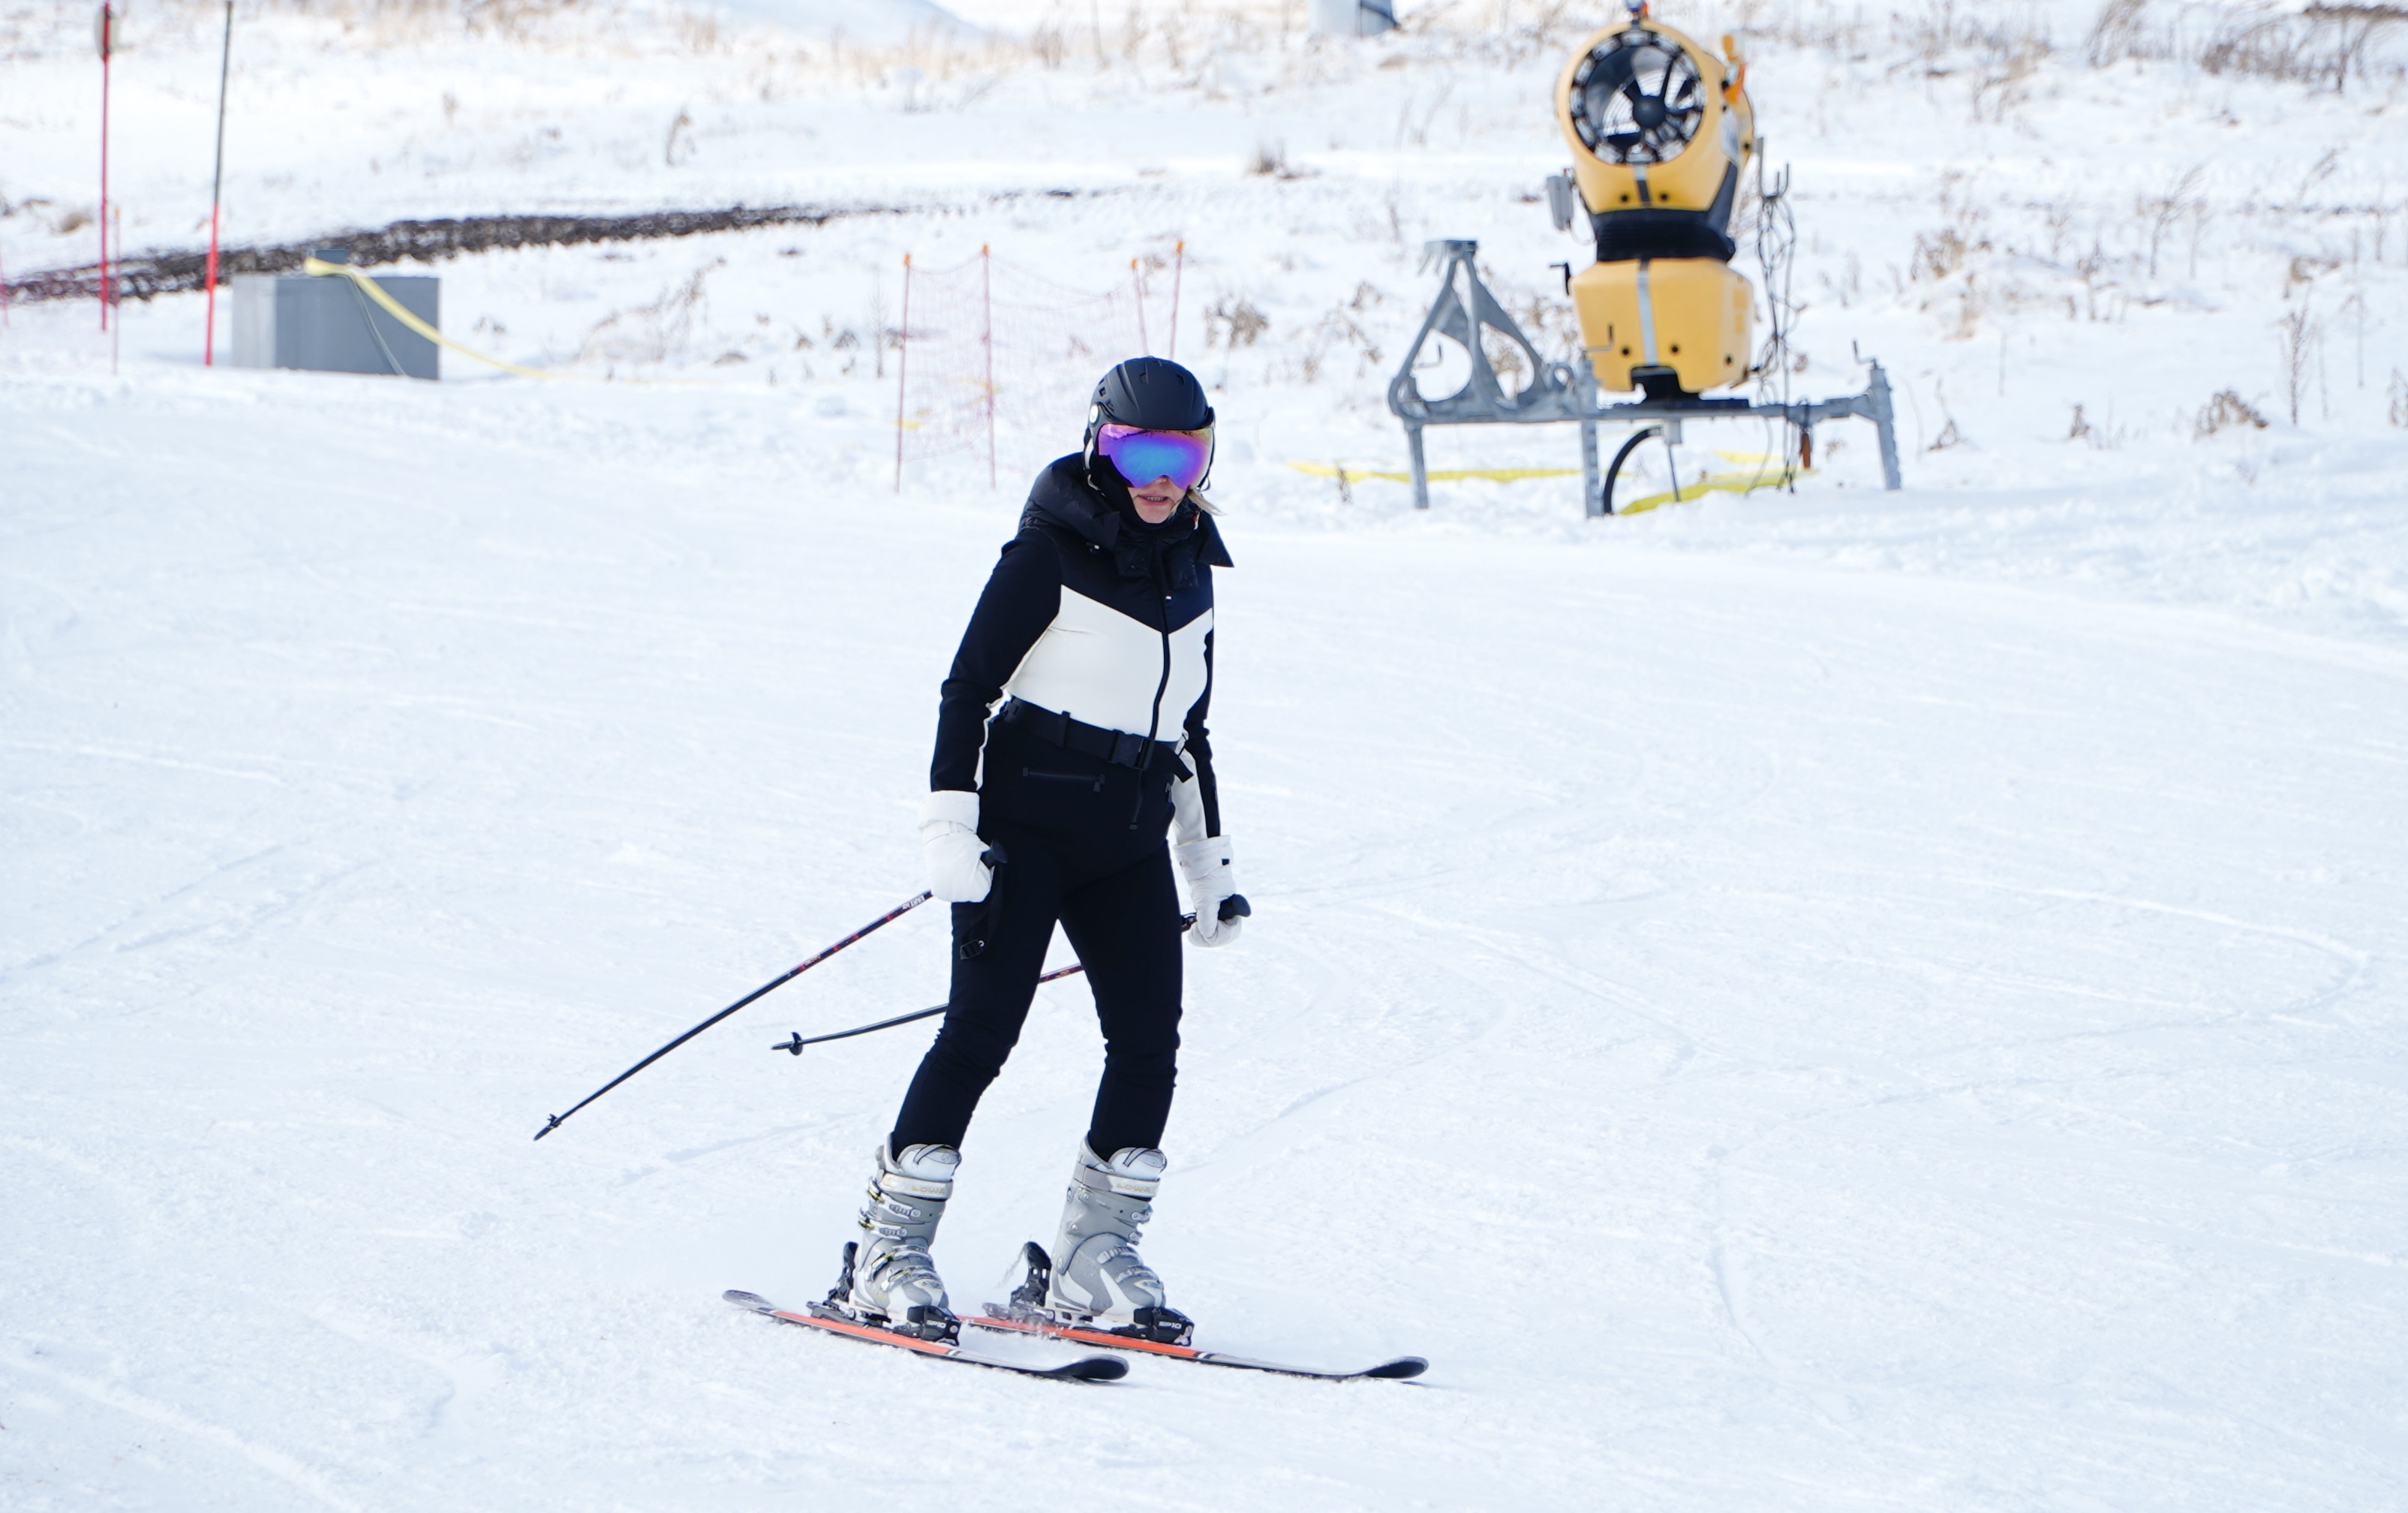 Erciyes Kayak Merkezi'nde hedef 3 milyon ziyaretçi